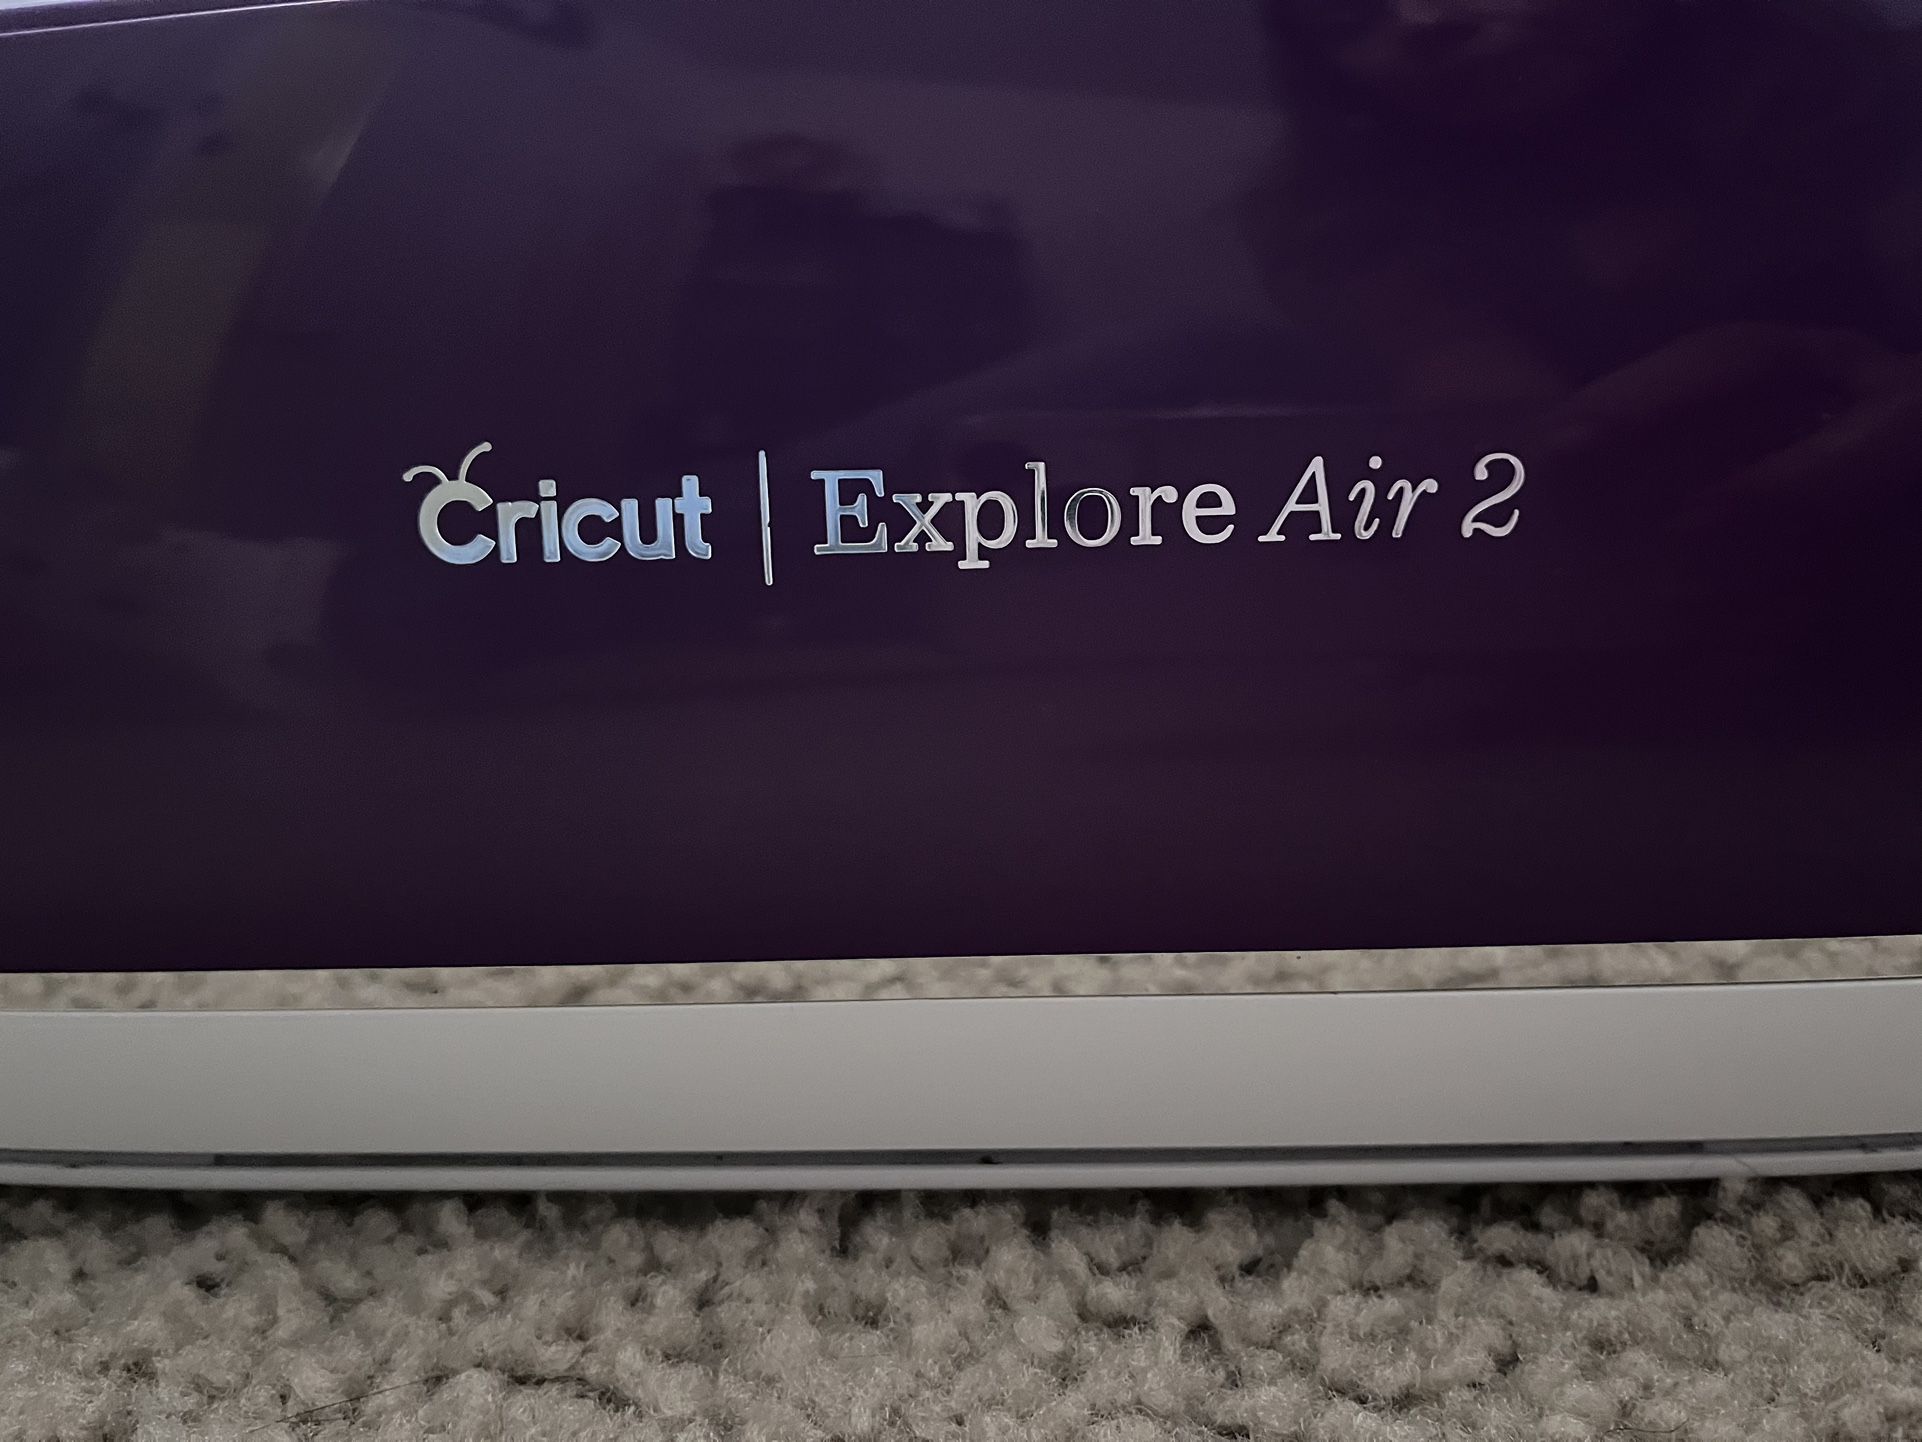 Cricut Explorer Air2